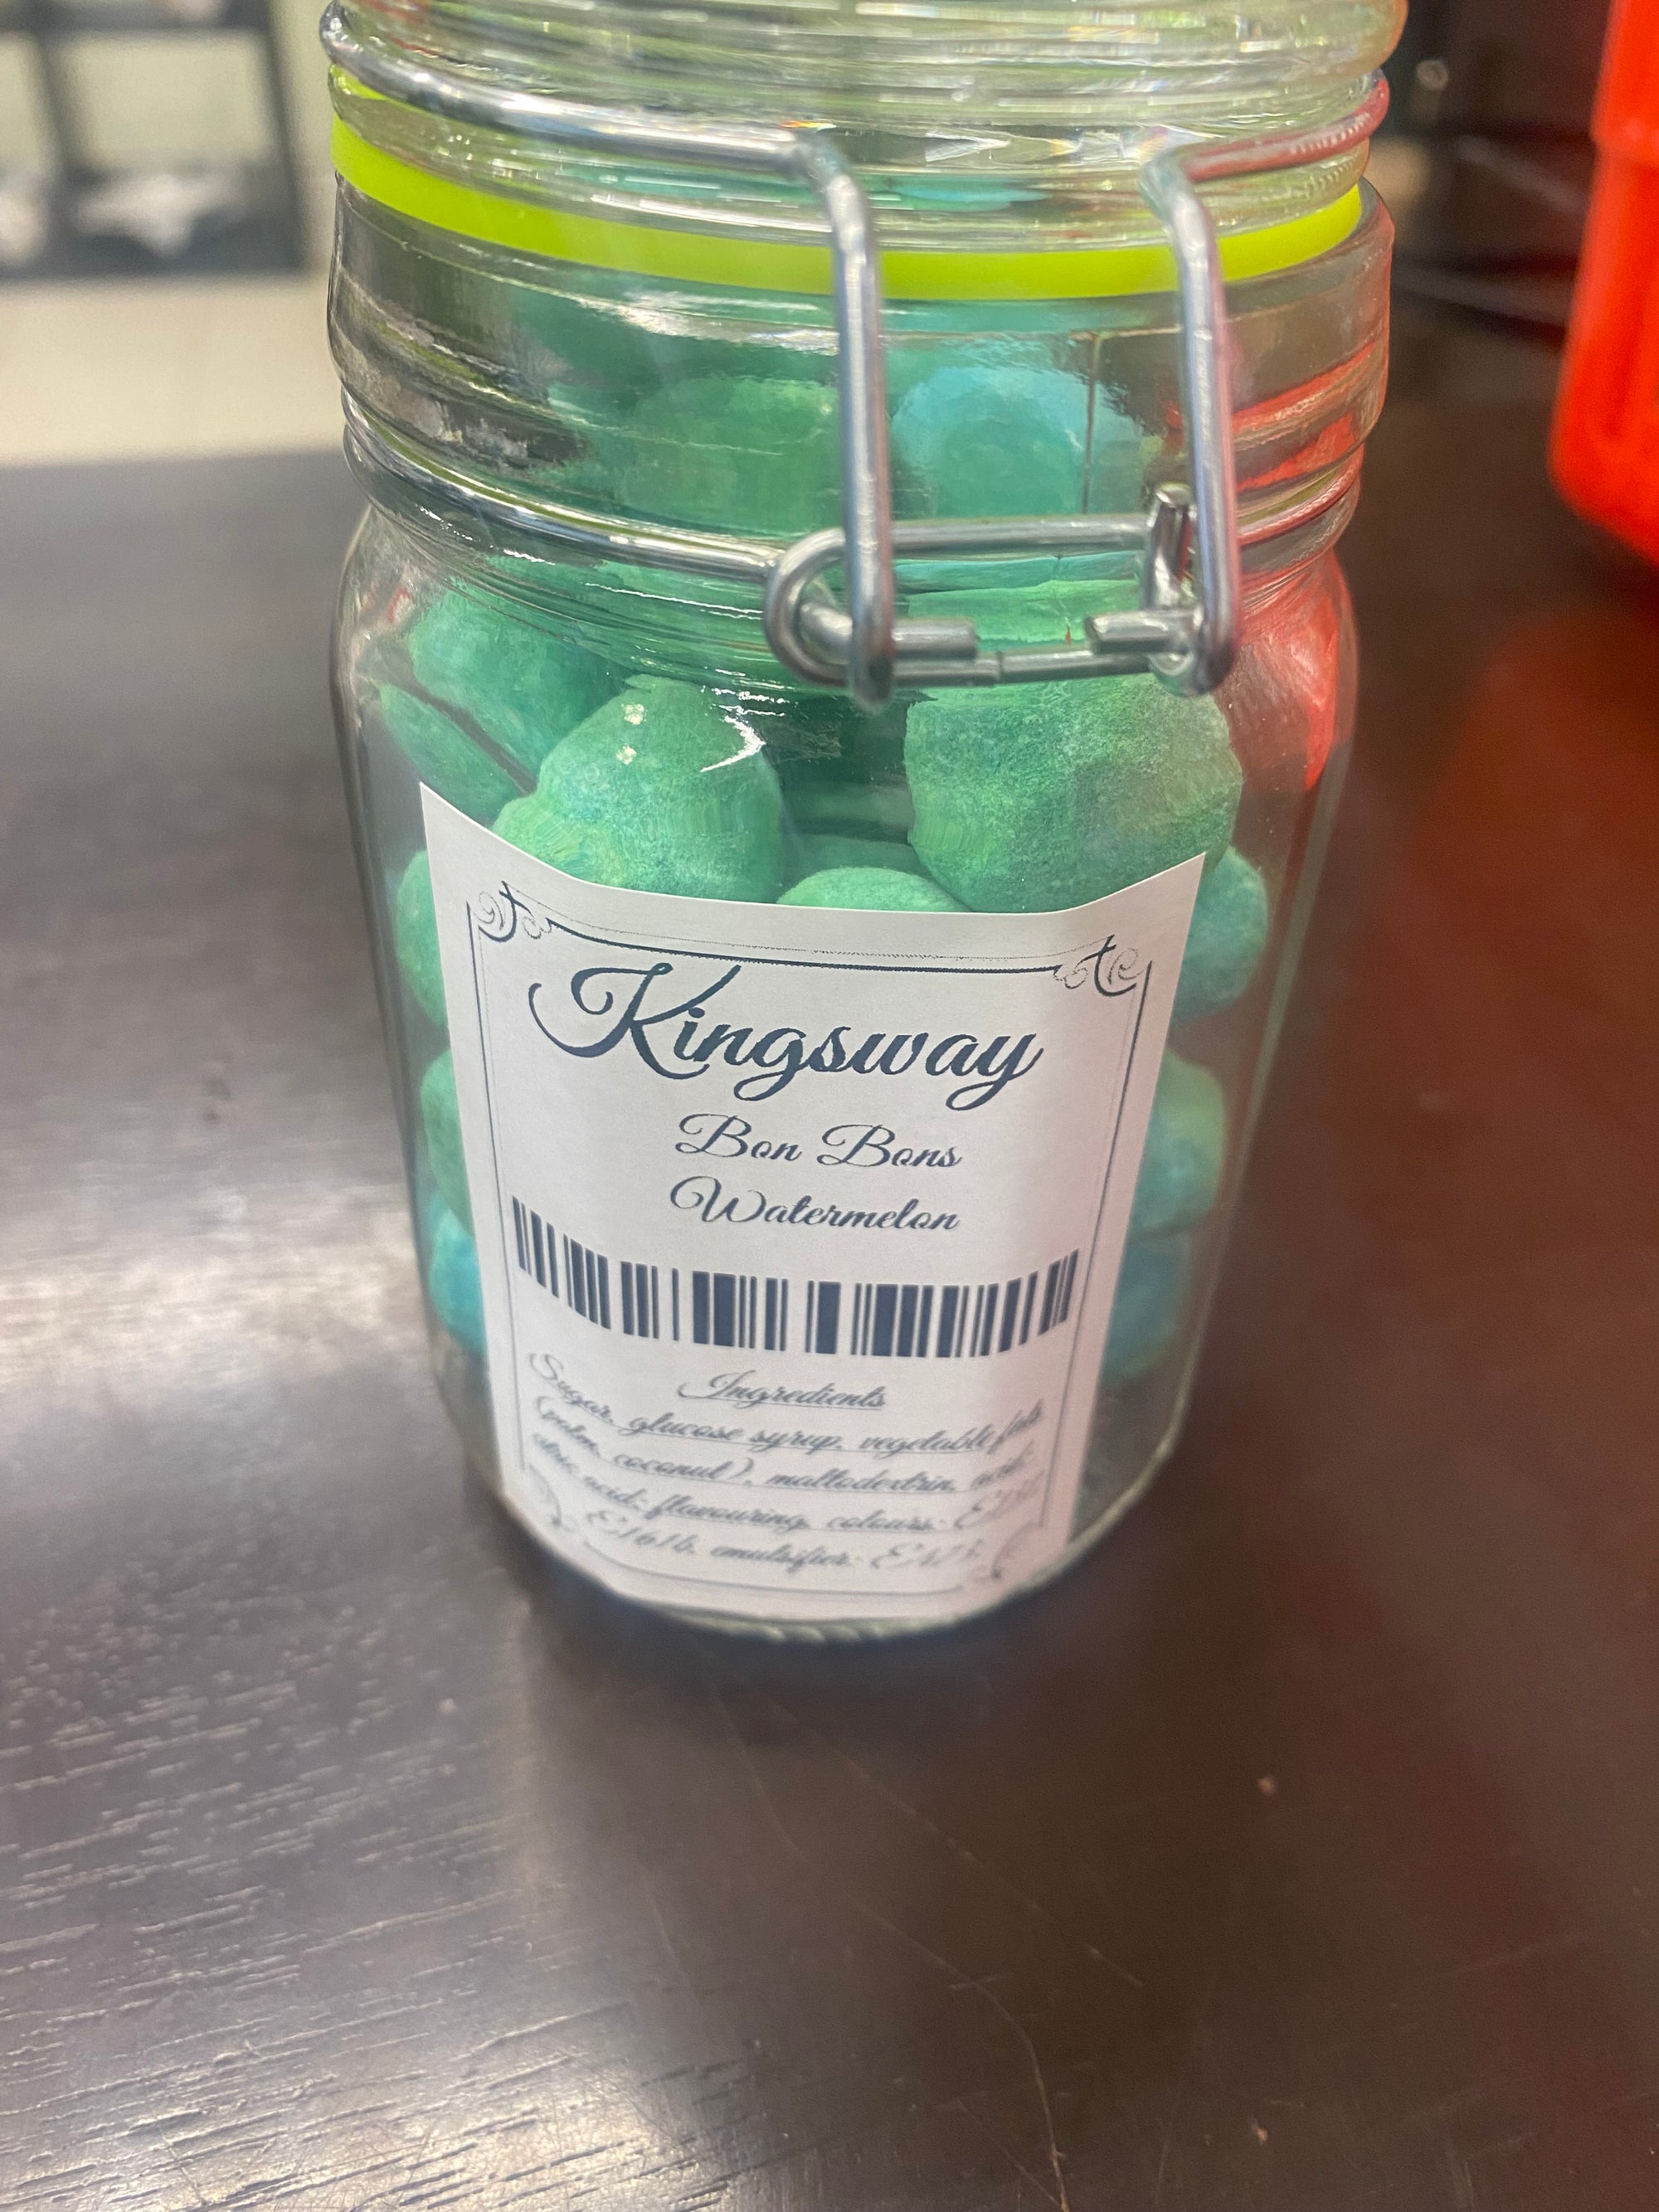 Kingsway Watermelon Bonbons per 150g with glass jar